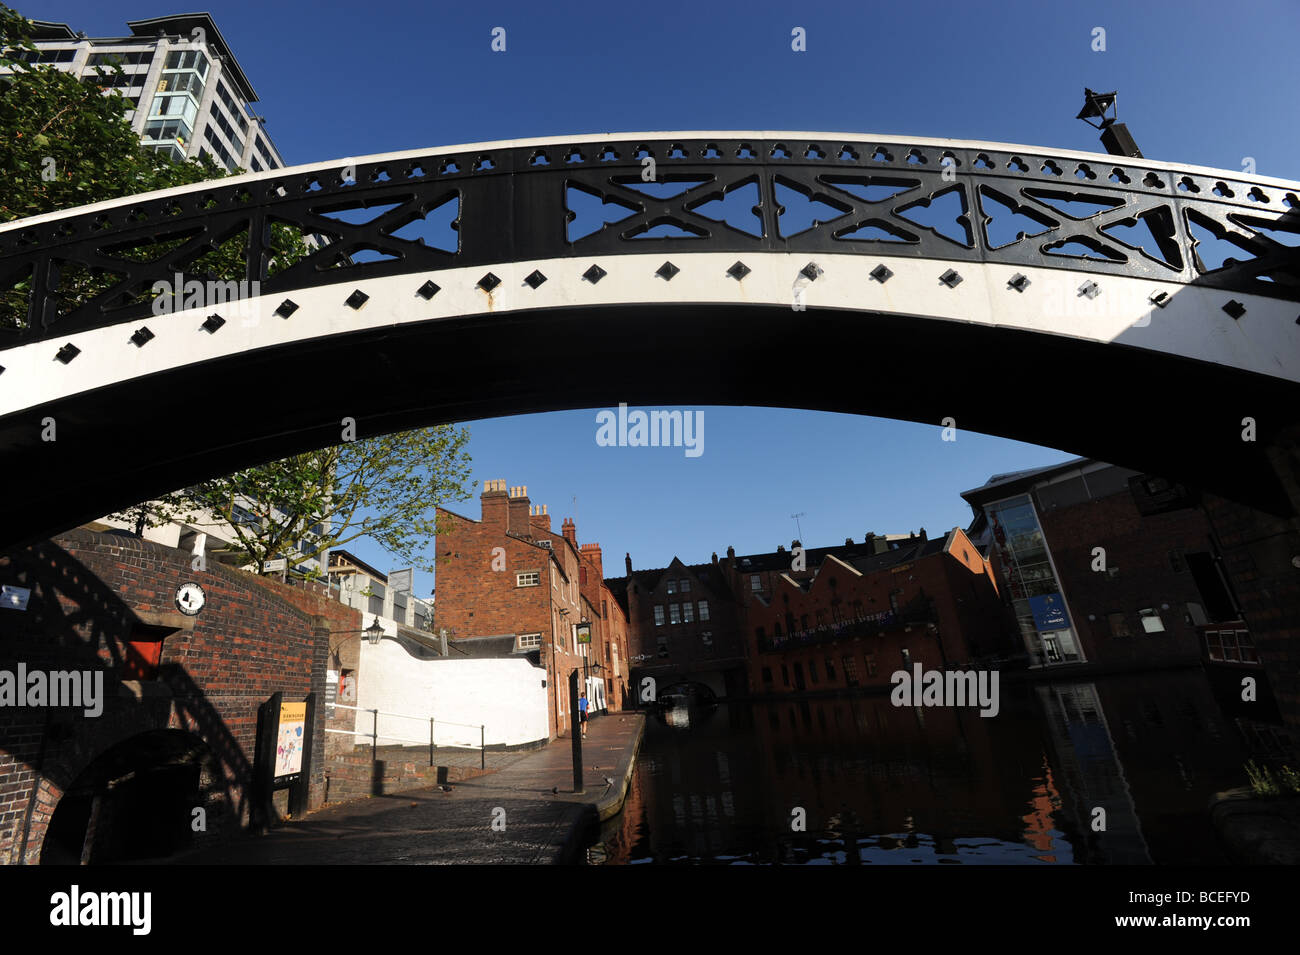 Cast iron footbridge over the canal in Gas Street Basin Birmingham England Uk Stock Photo